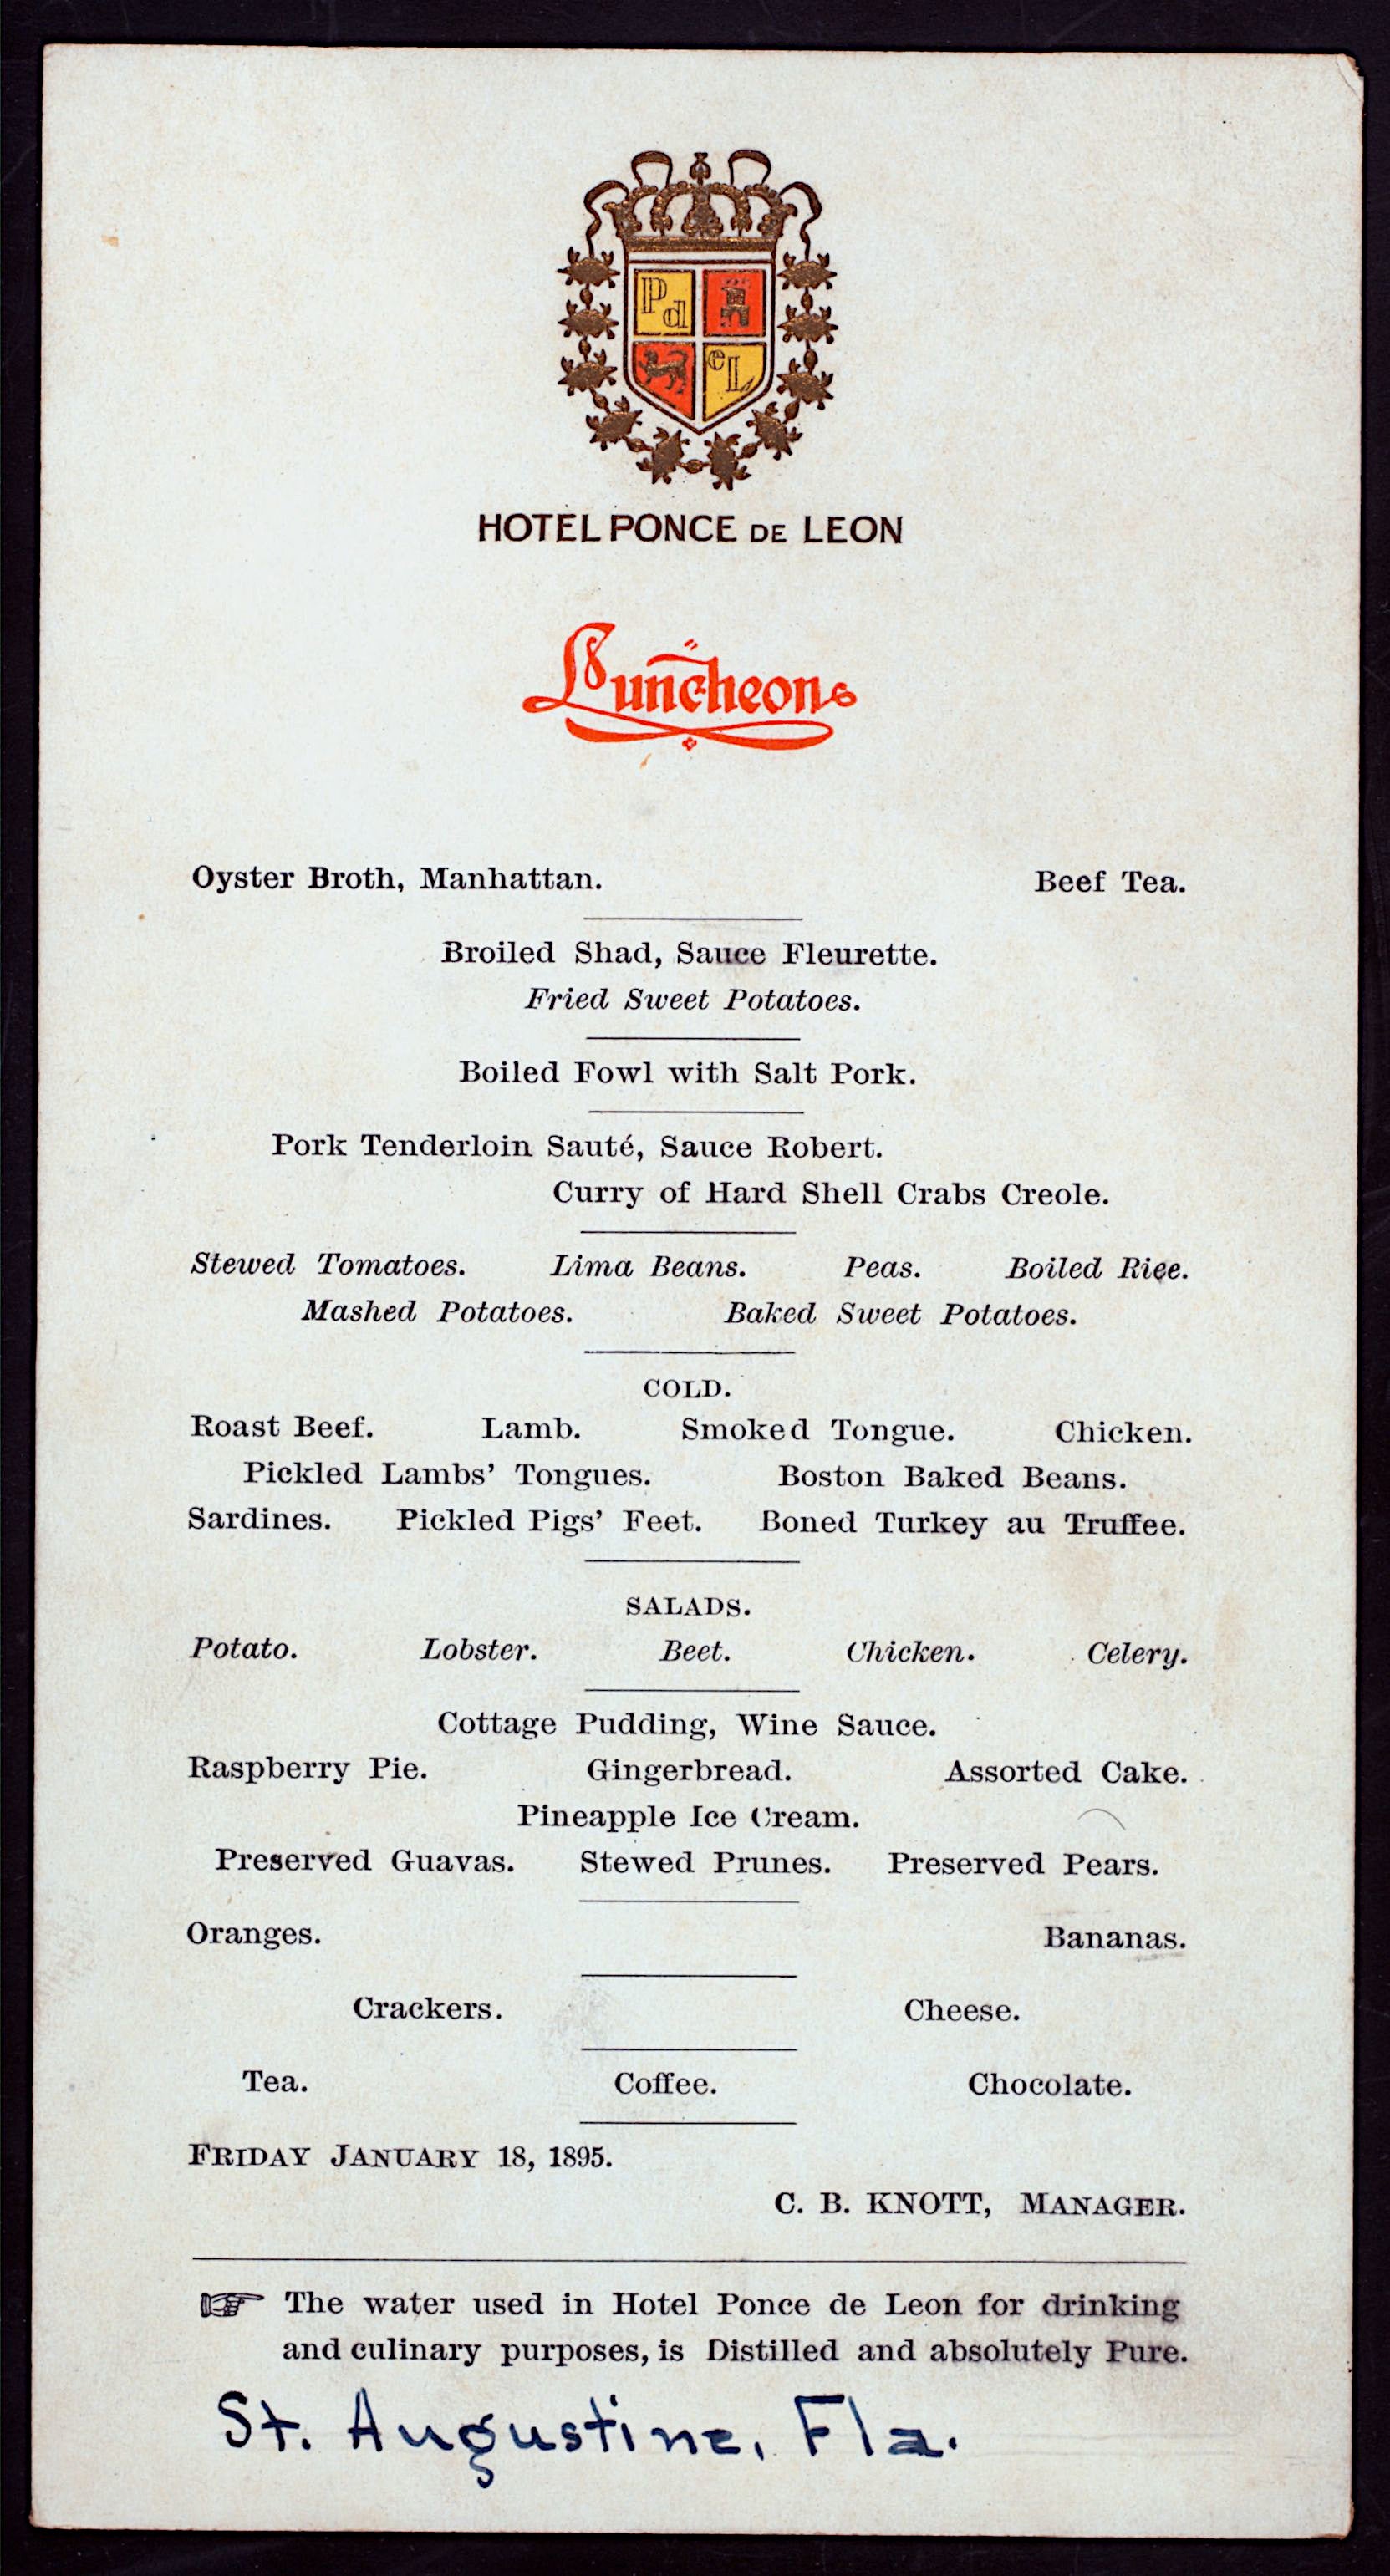 Hotel Ponce de Leon menu (dinner) from 1895 Saint Augustine.